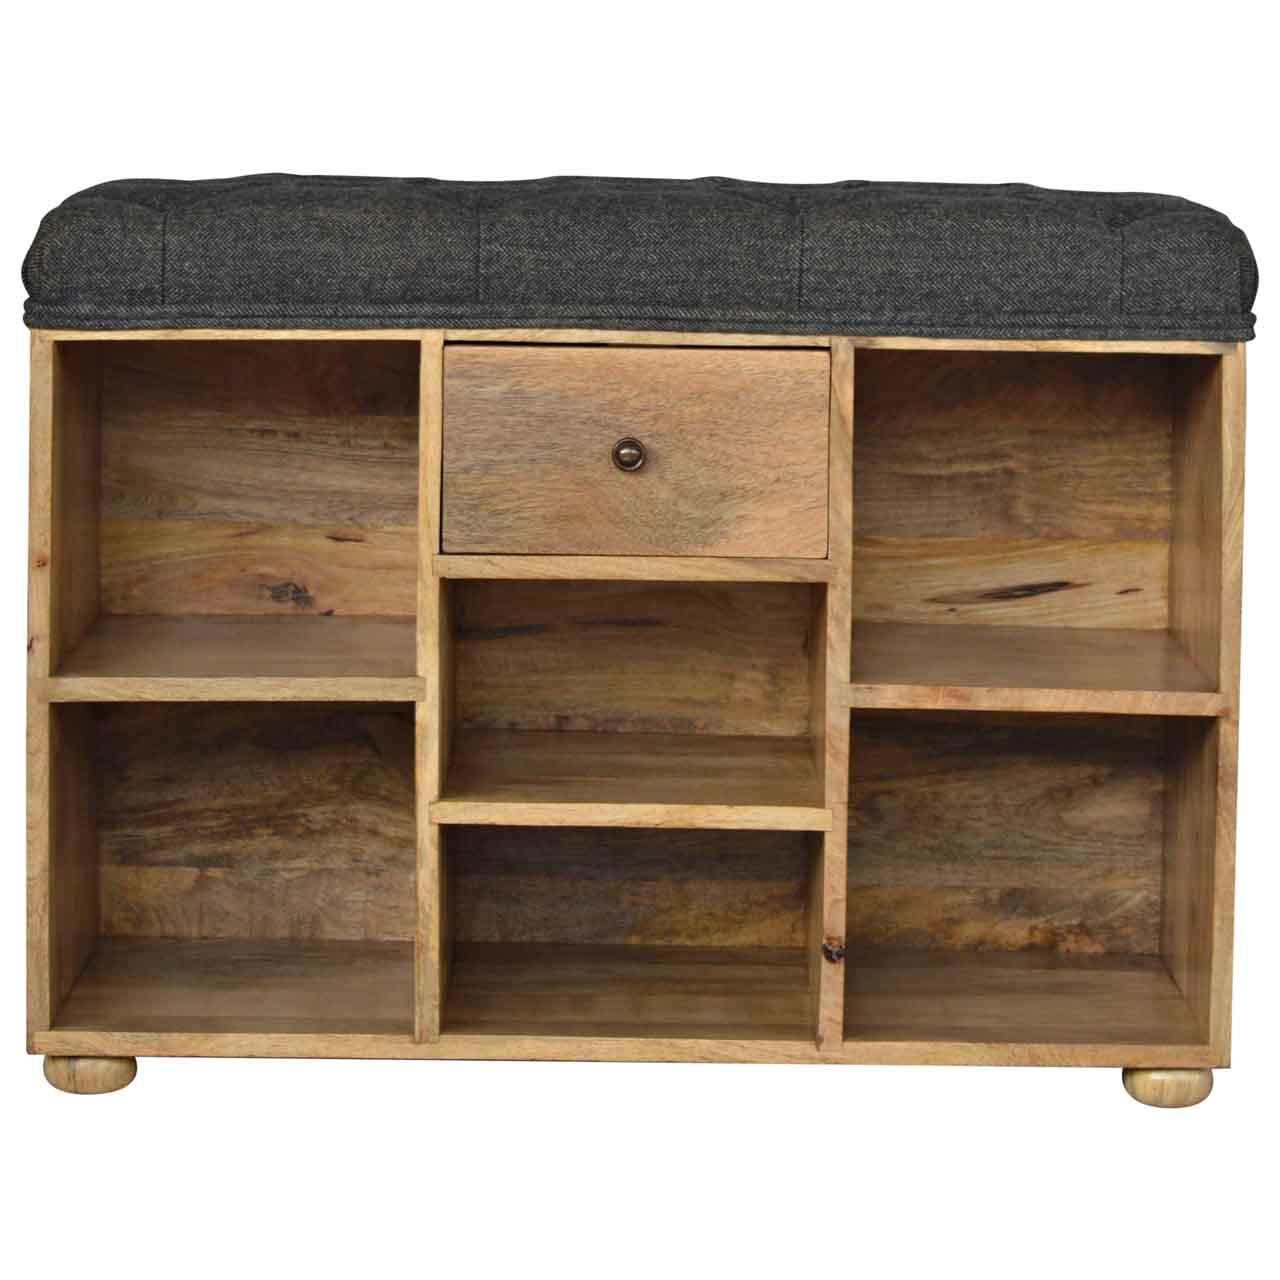 Black tweed 6 slot shoe storage bench - crimblefest furniture - image 1